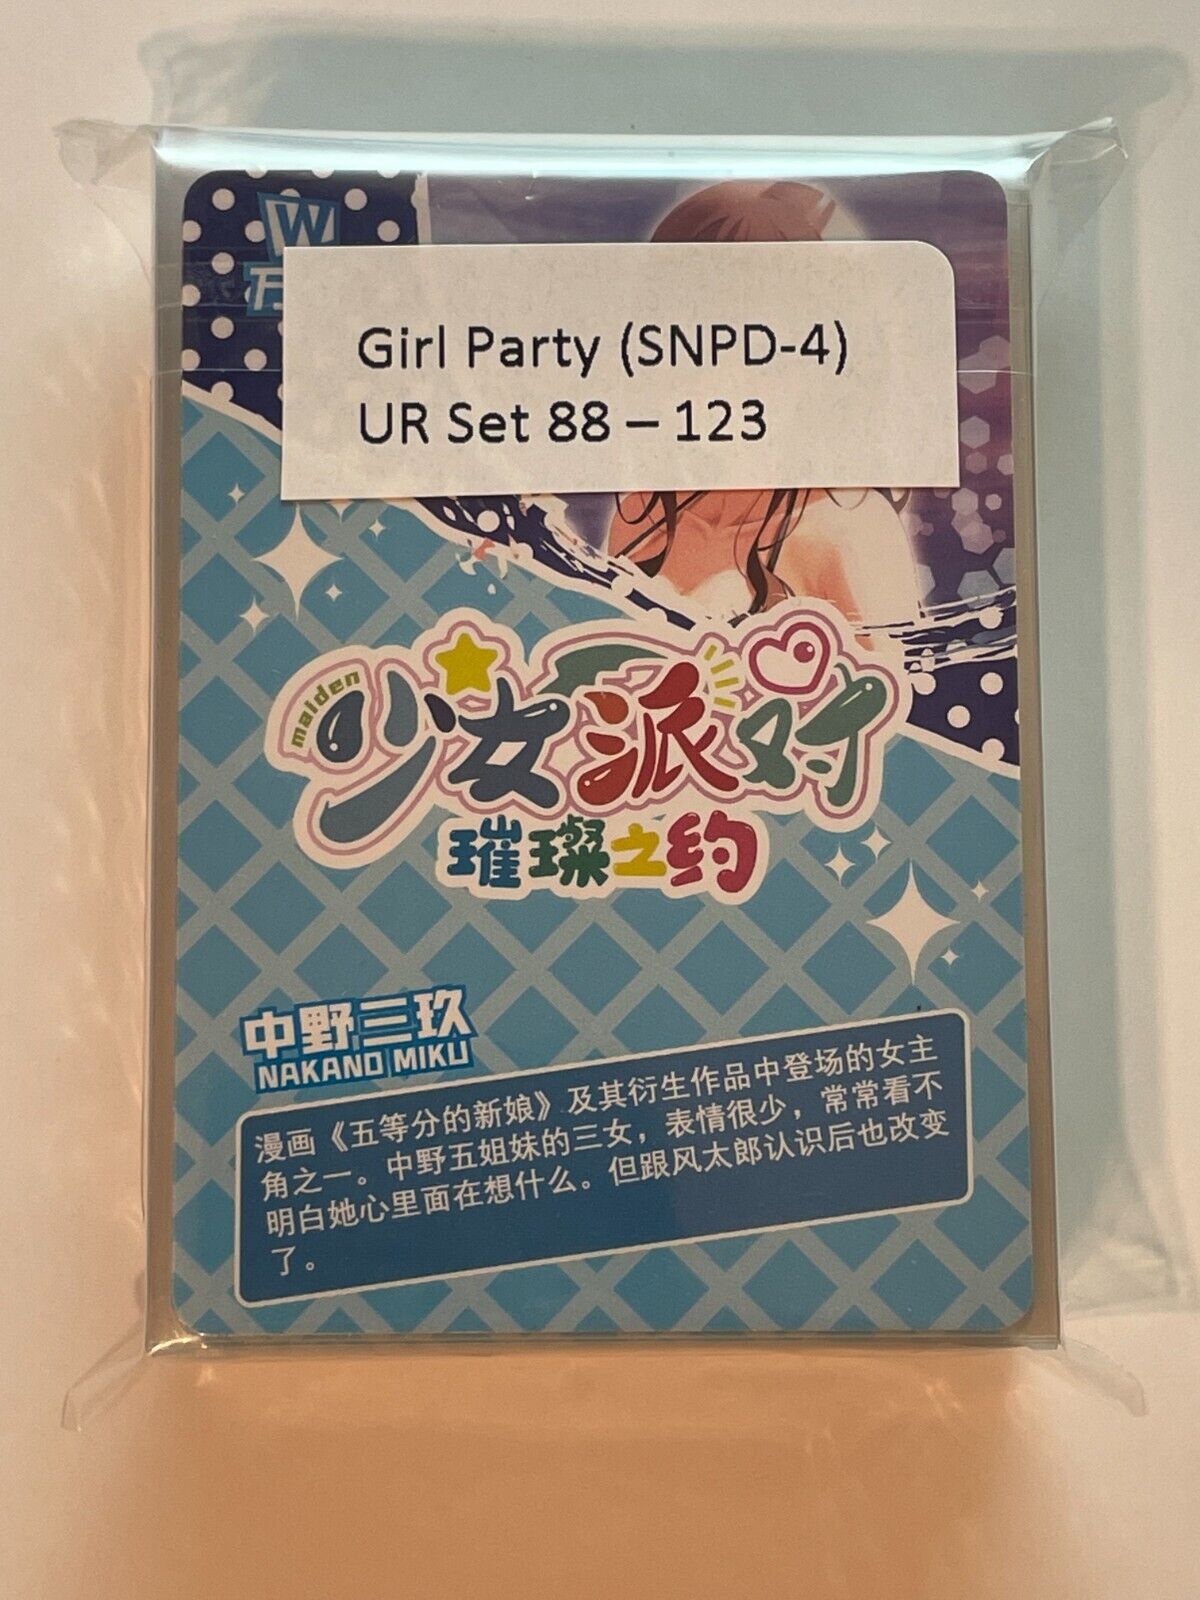 🔥 Maiden / Girl Party - Goddess Story [SSR / UR] Lot Bundle - Anime Cards 🔥